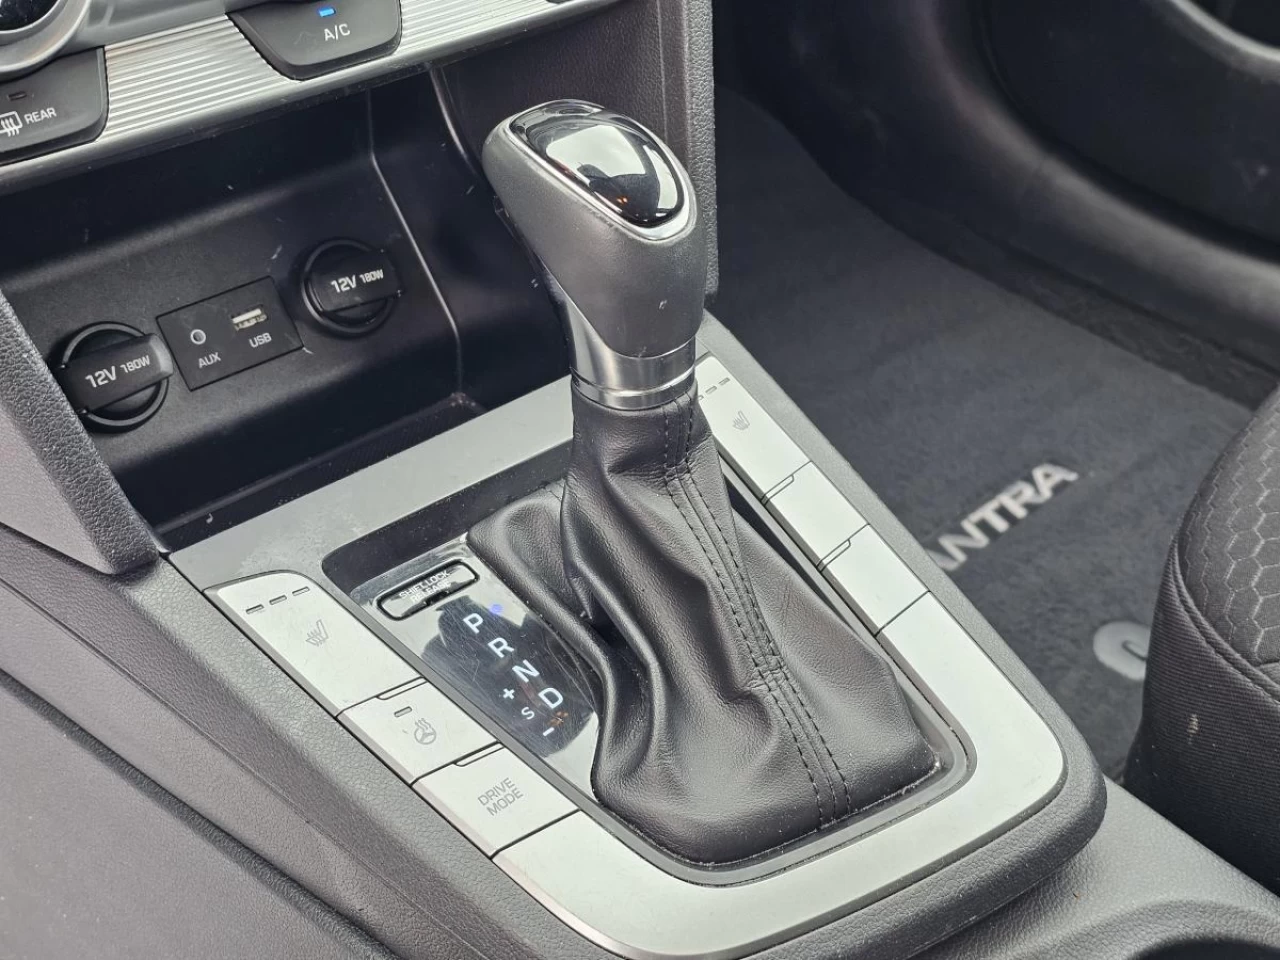 2020 Hyundai Elantra Preferred IVT Main Image